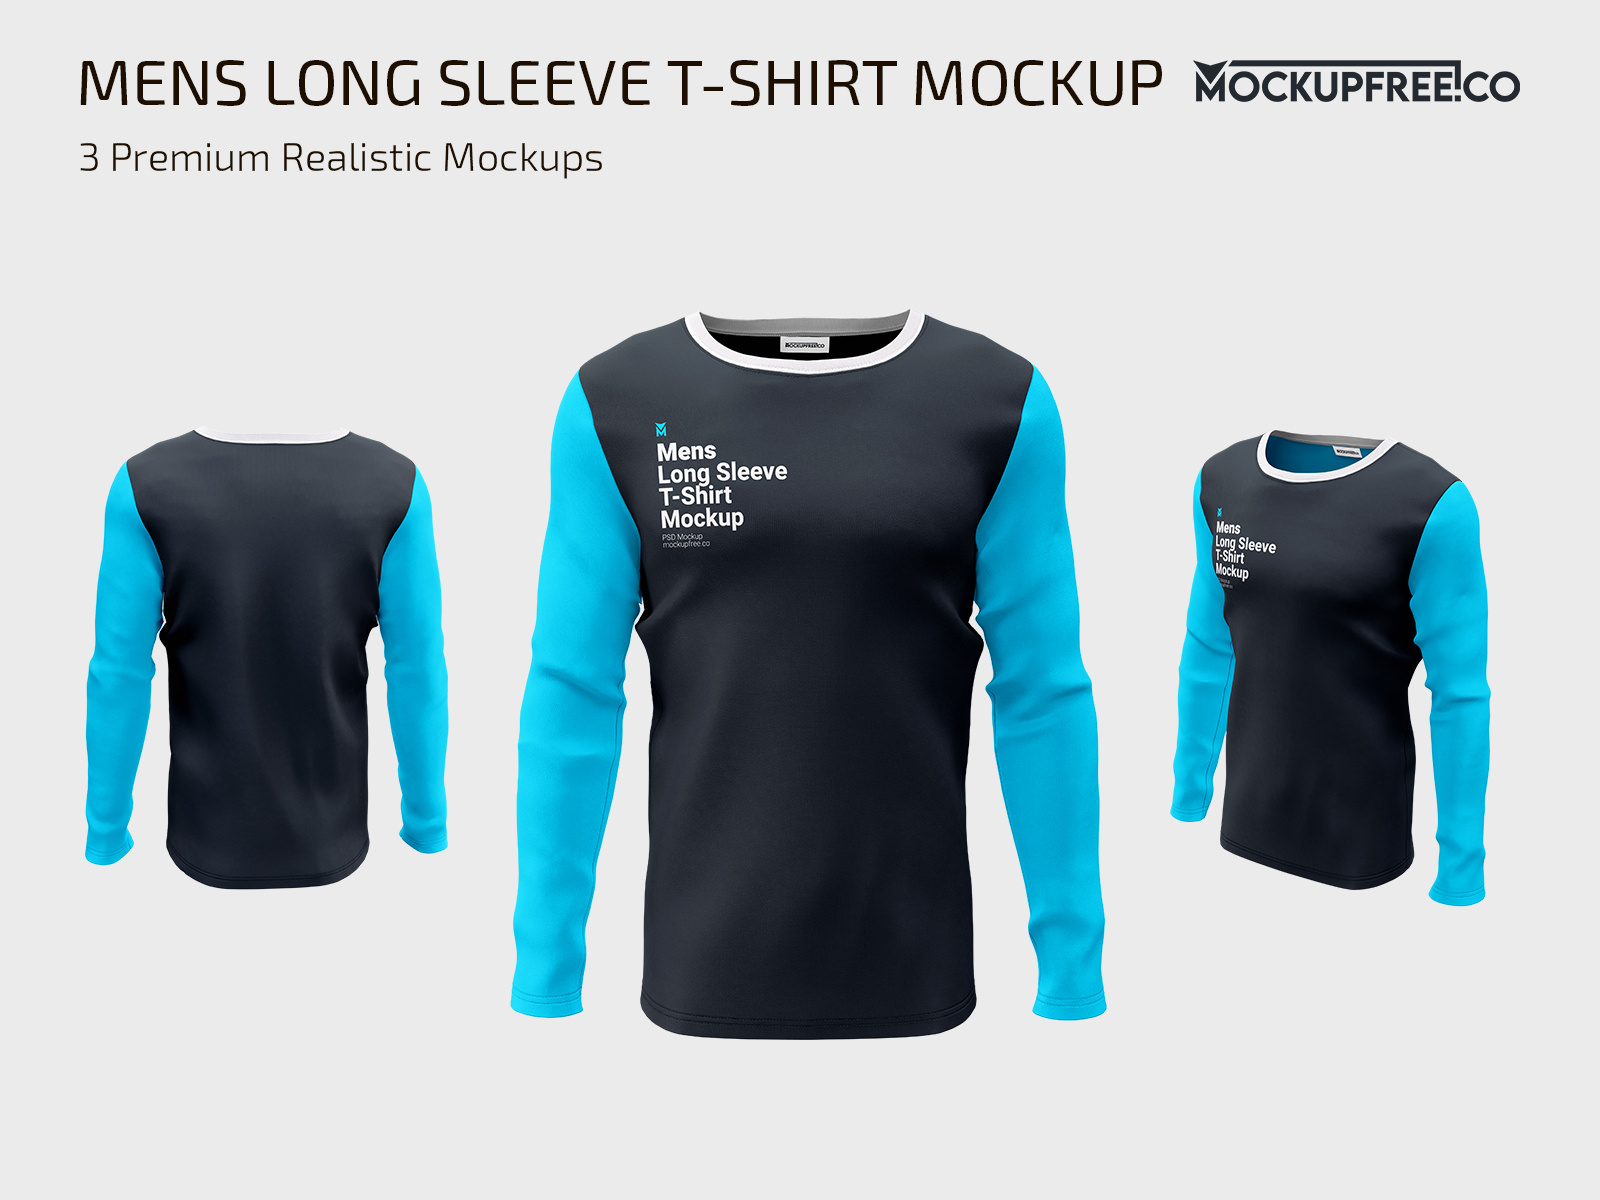 Men's Long Sleeve T-Shirt PSD Mockup by mockupfree.co on Dribbble